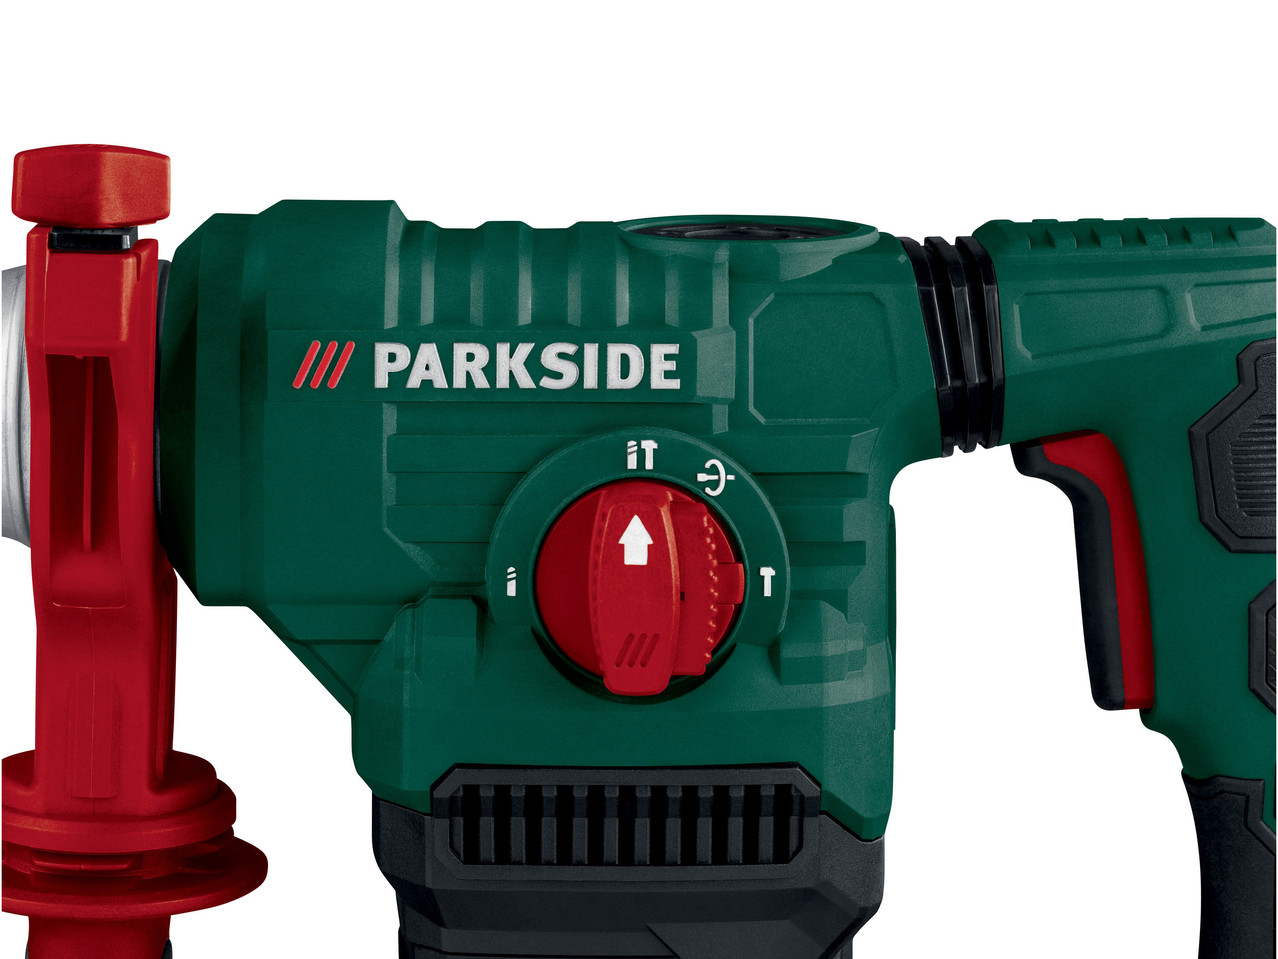 PARKSIDE 1500W Hammer Drill